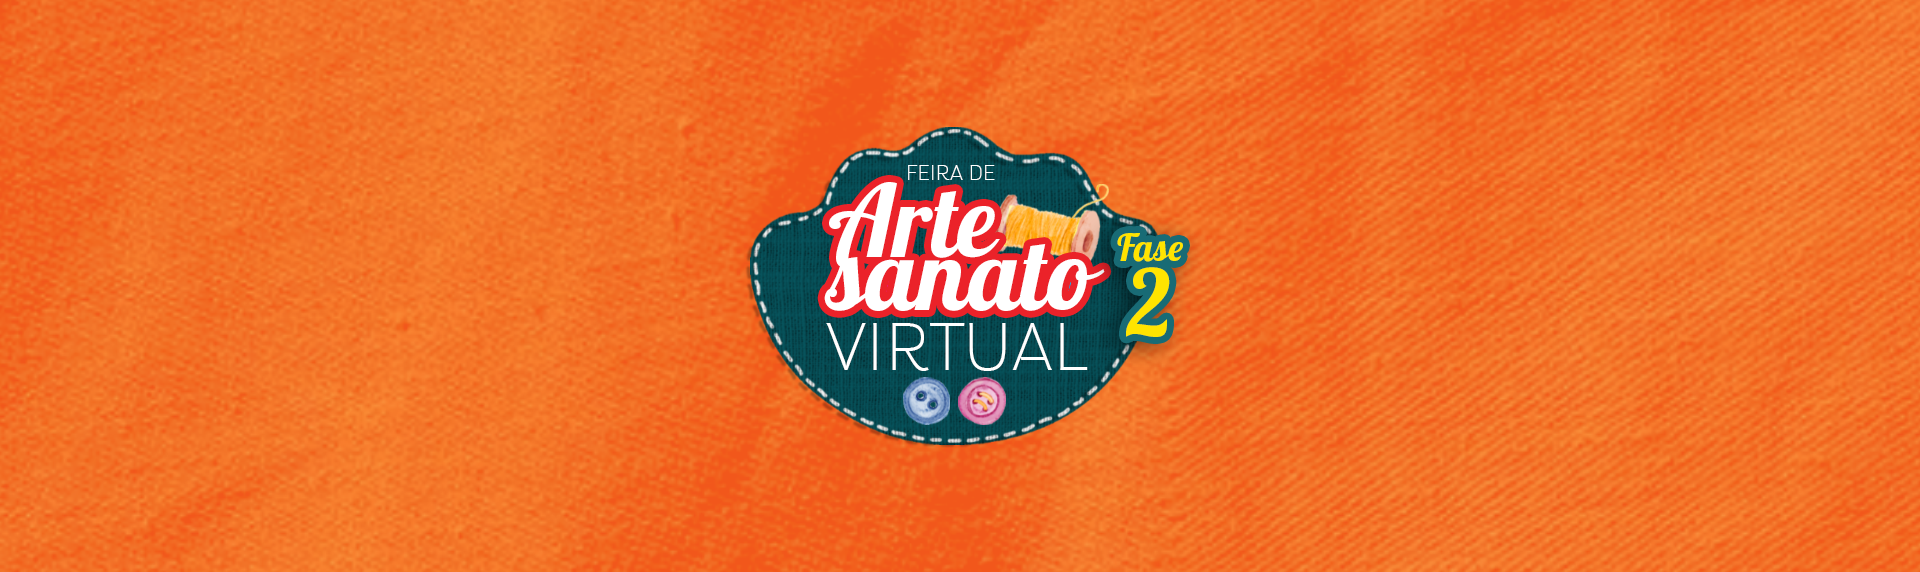 Feira de Artesanato Virtual abre 100 vagas a partir desta quarta (15)